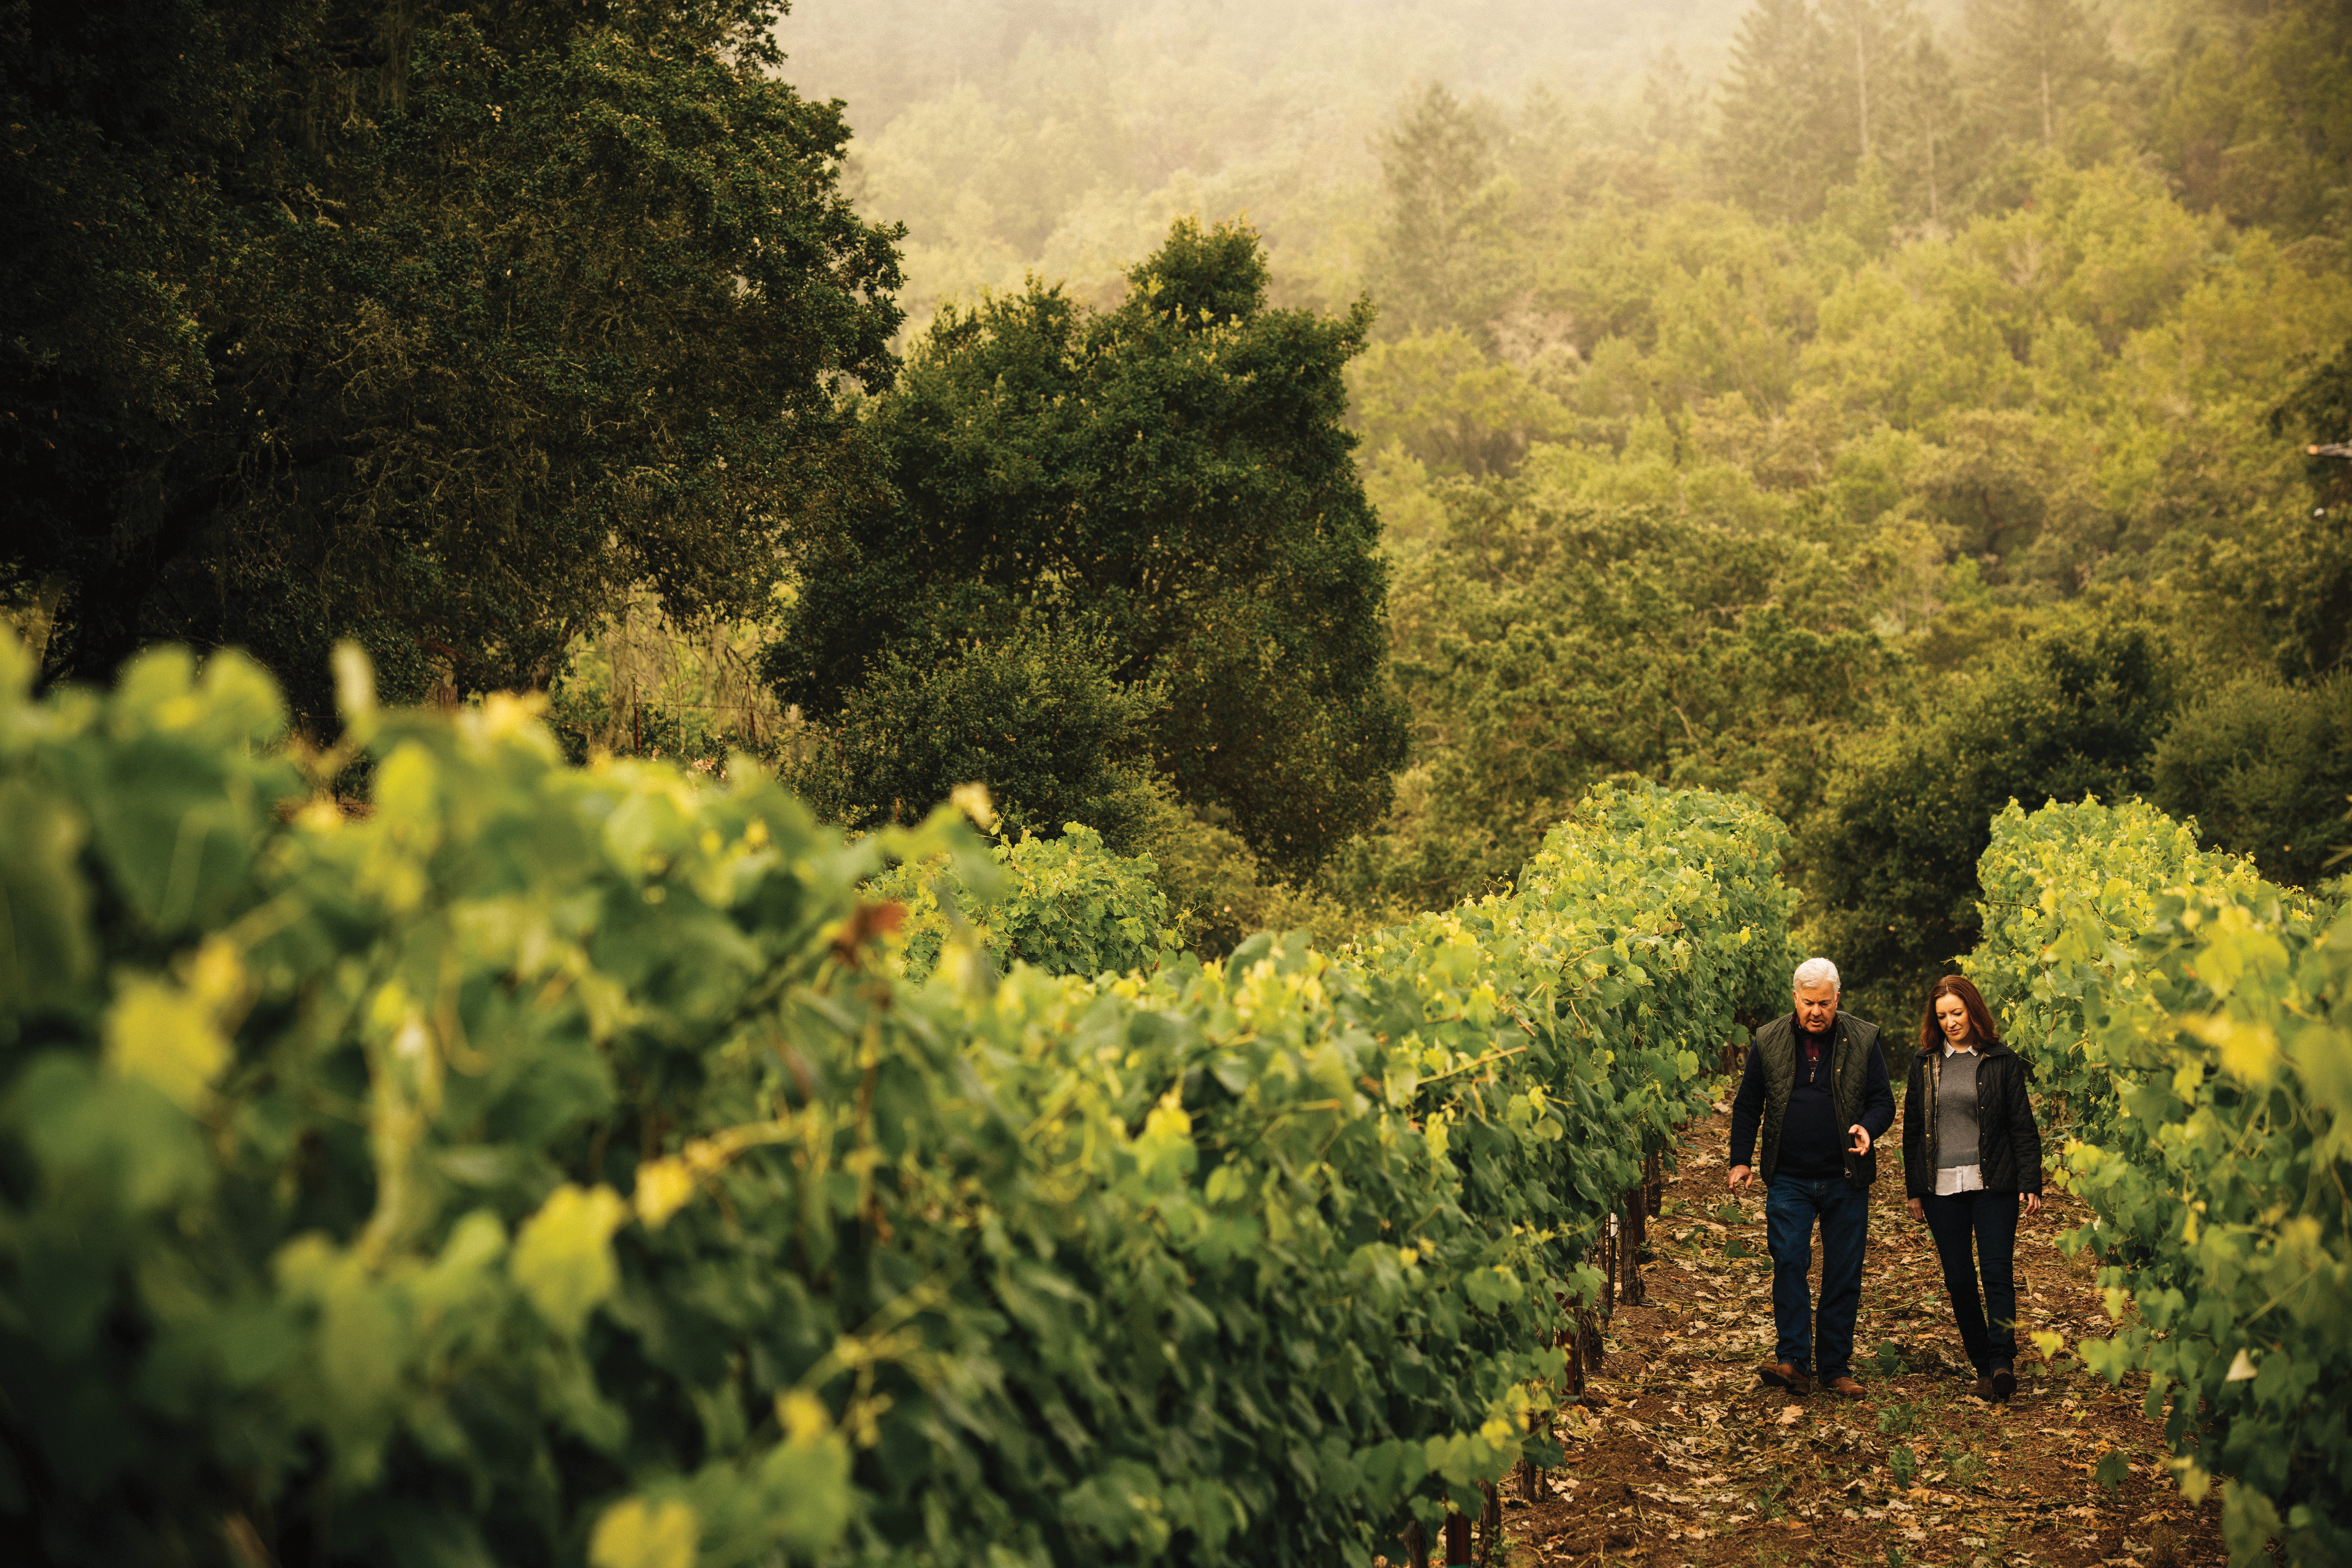 Emeritus Vintner Ted Edwards and Winemaker Kristy Melton walking through the vines.